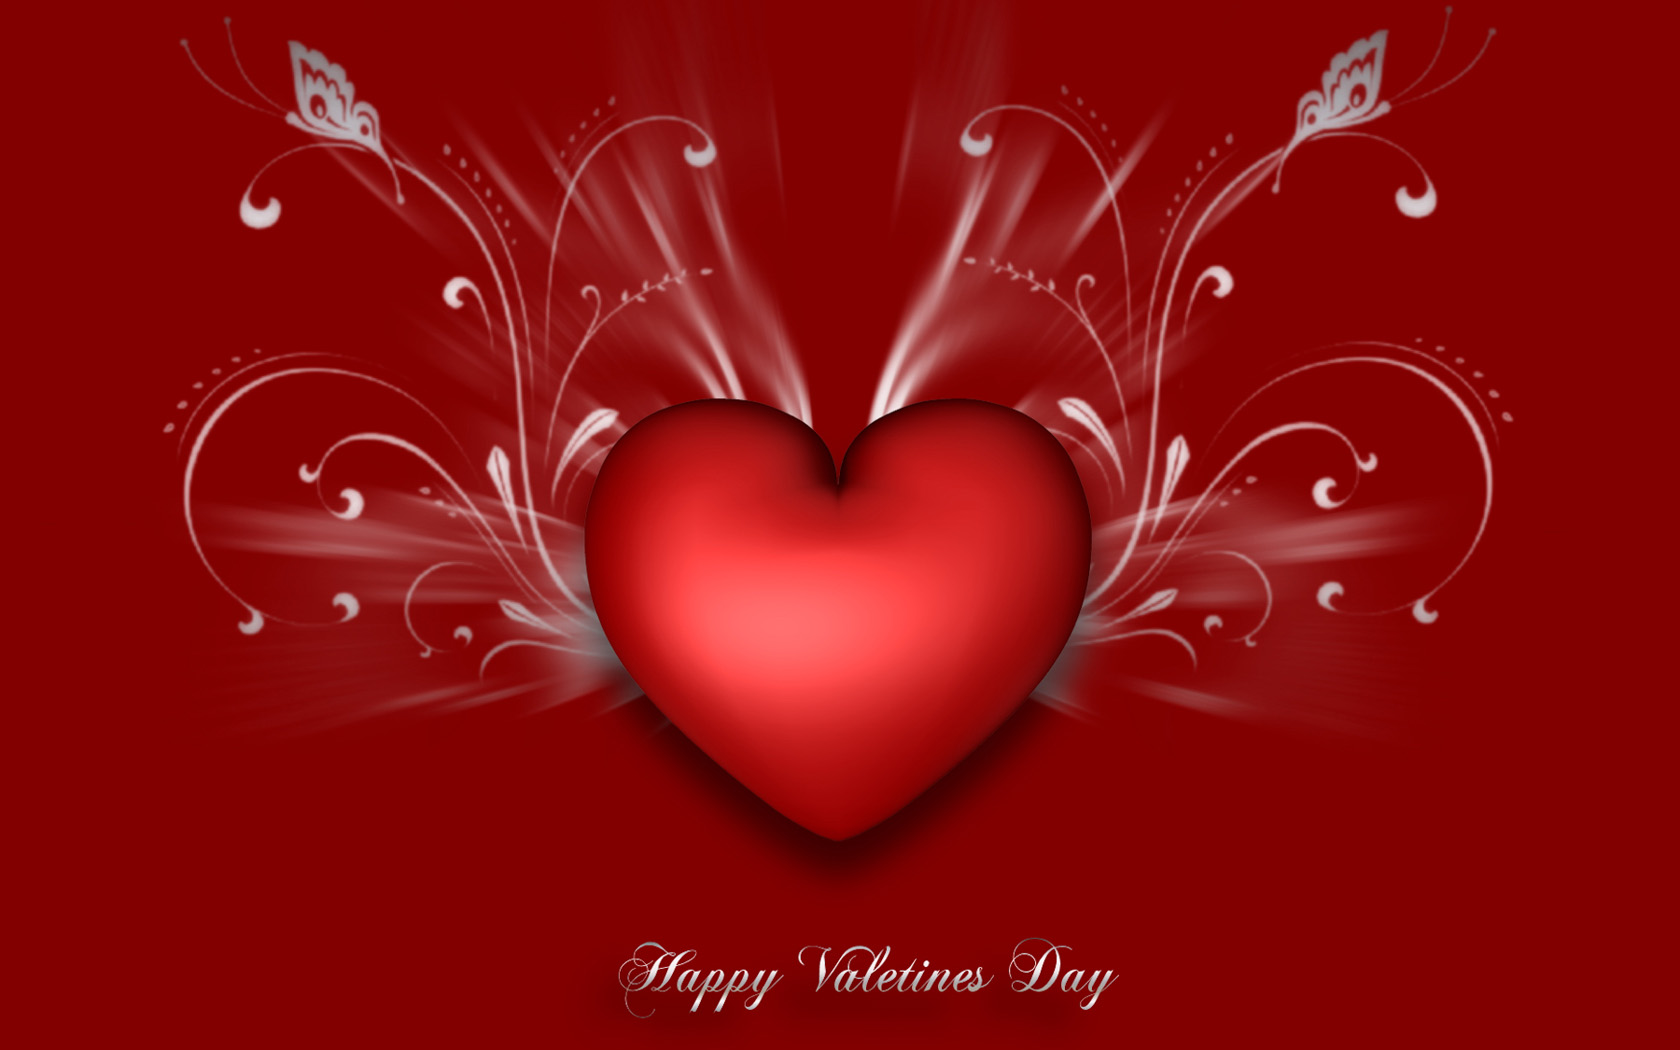 47] Valentines Bing Images Wallpaper on WallpaperSafari 1680x1050